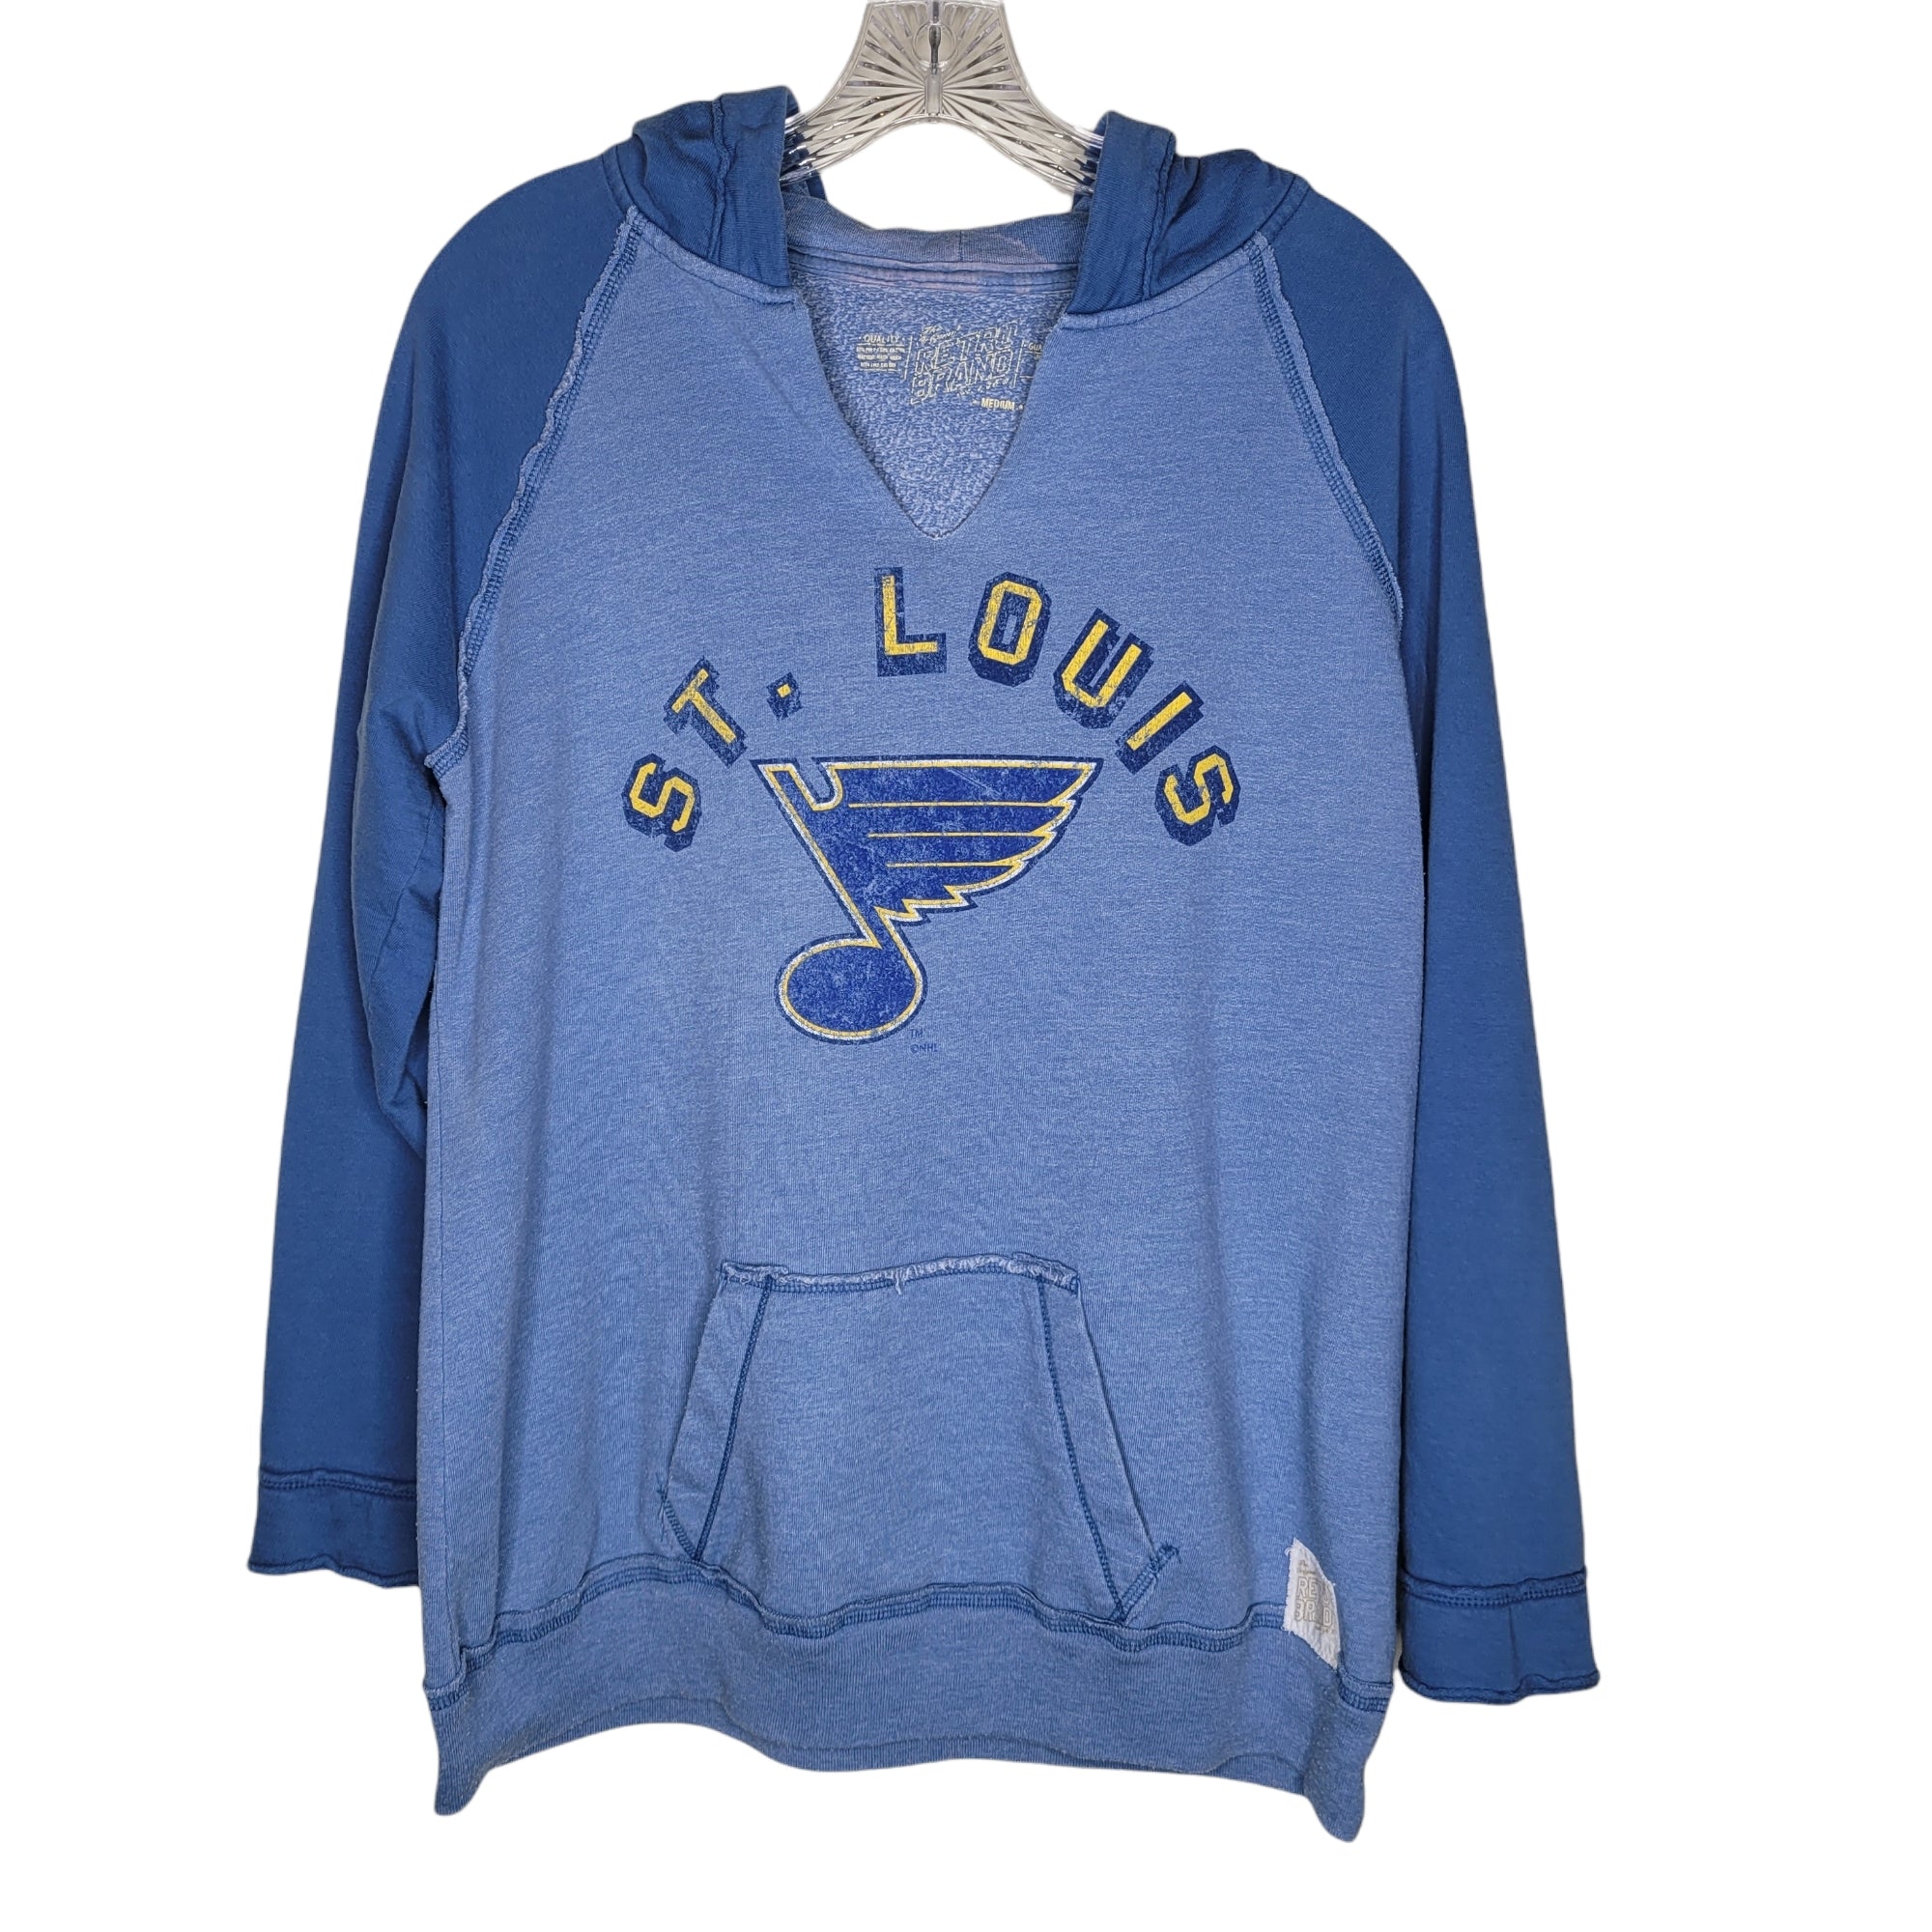 The Original Retro Brand Women's St. Louis Blue Hoodie Size Medium